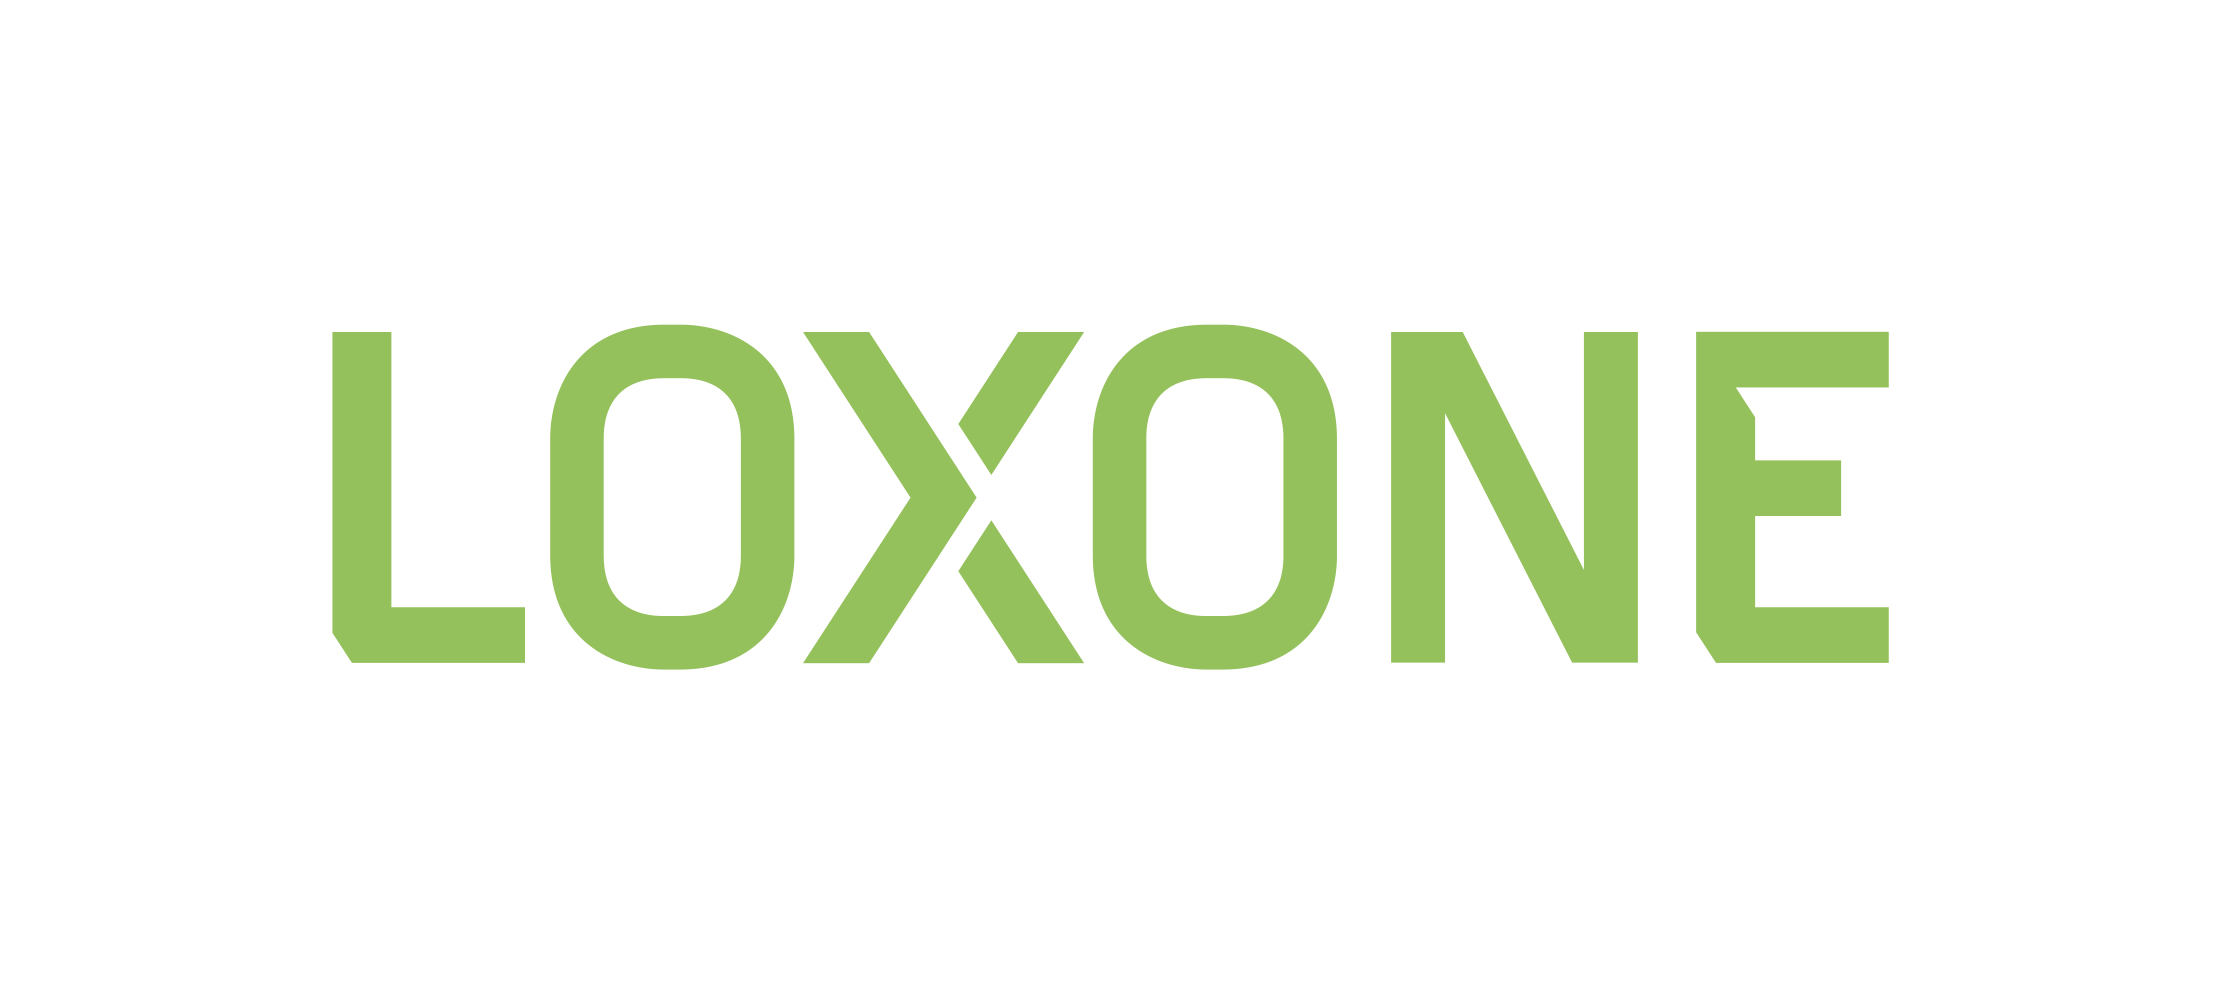 Logo Loxone green Web